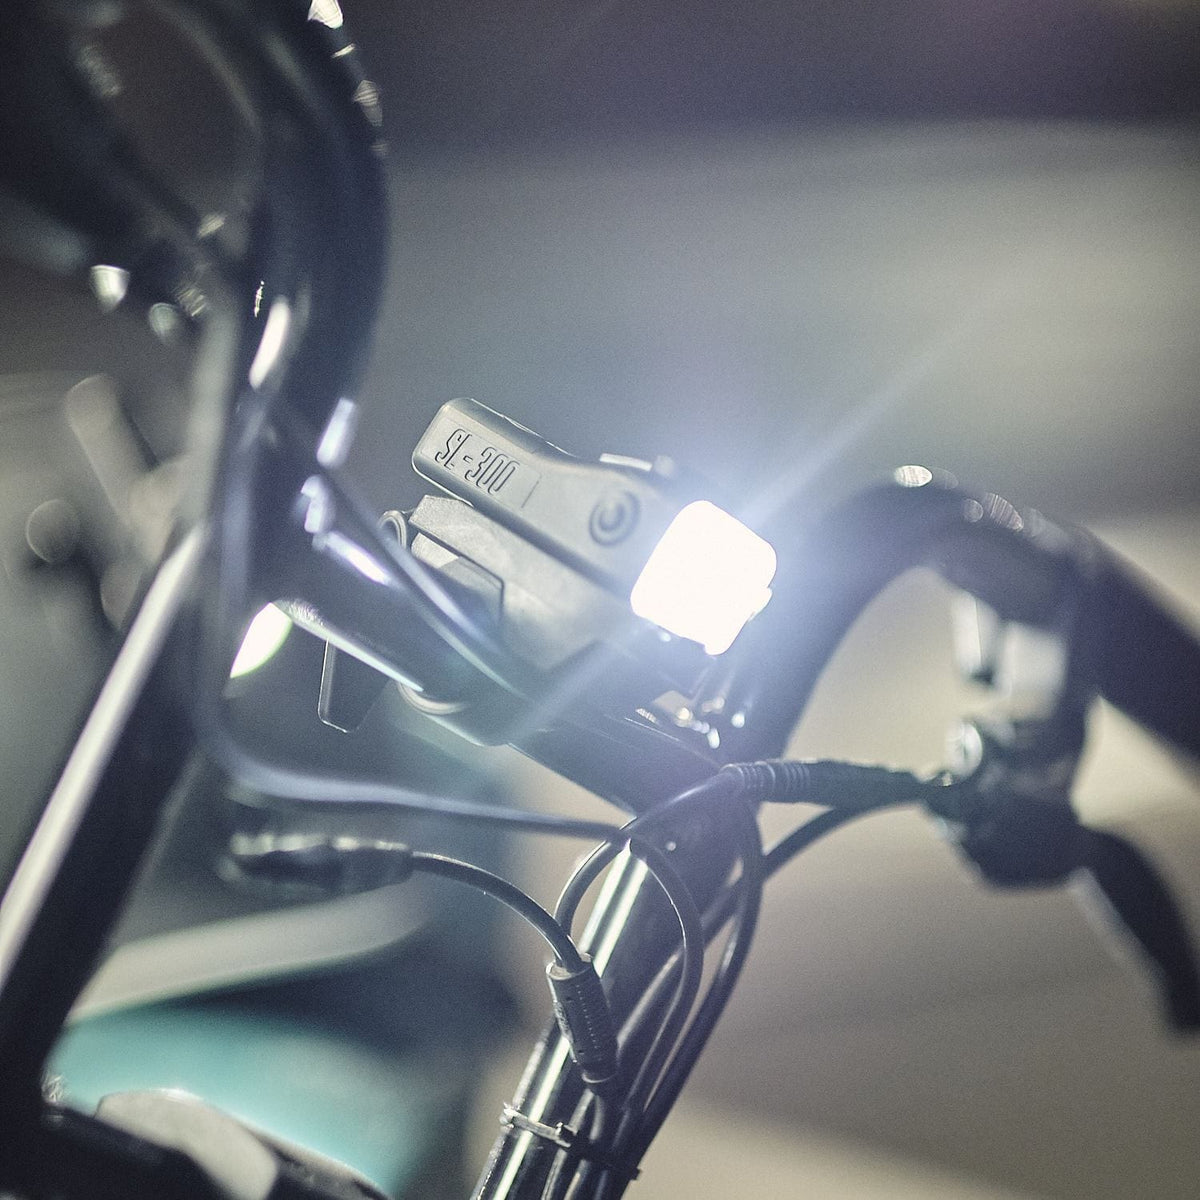 SL-300 Headlight & SL-R1 Rear Light Bike Bundle